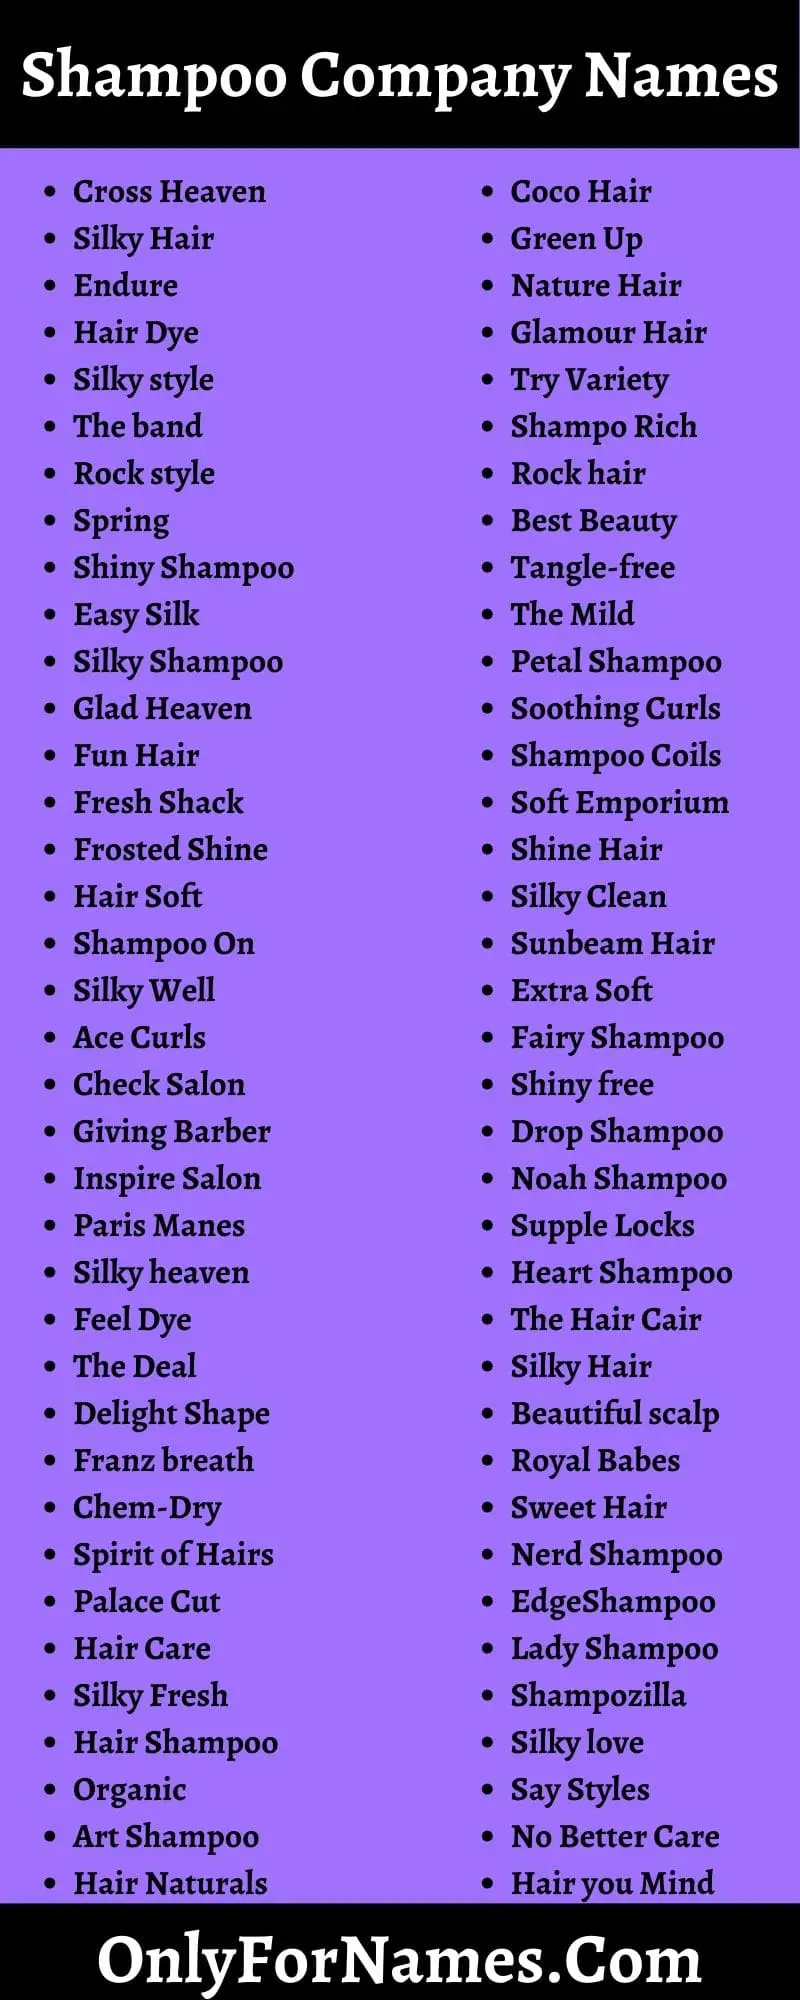 Shampoo Company Names